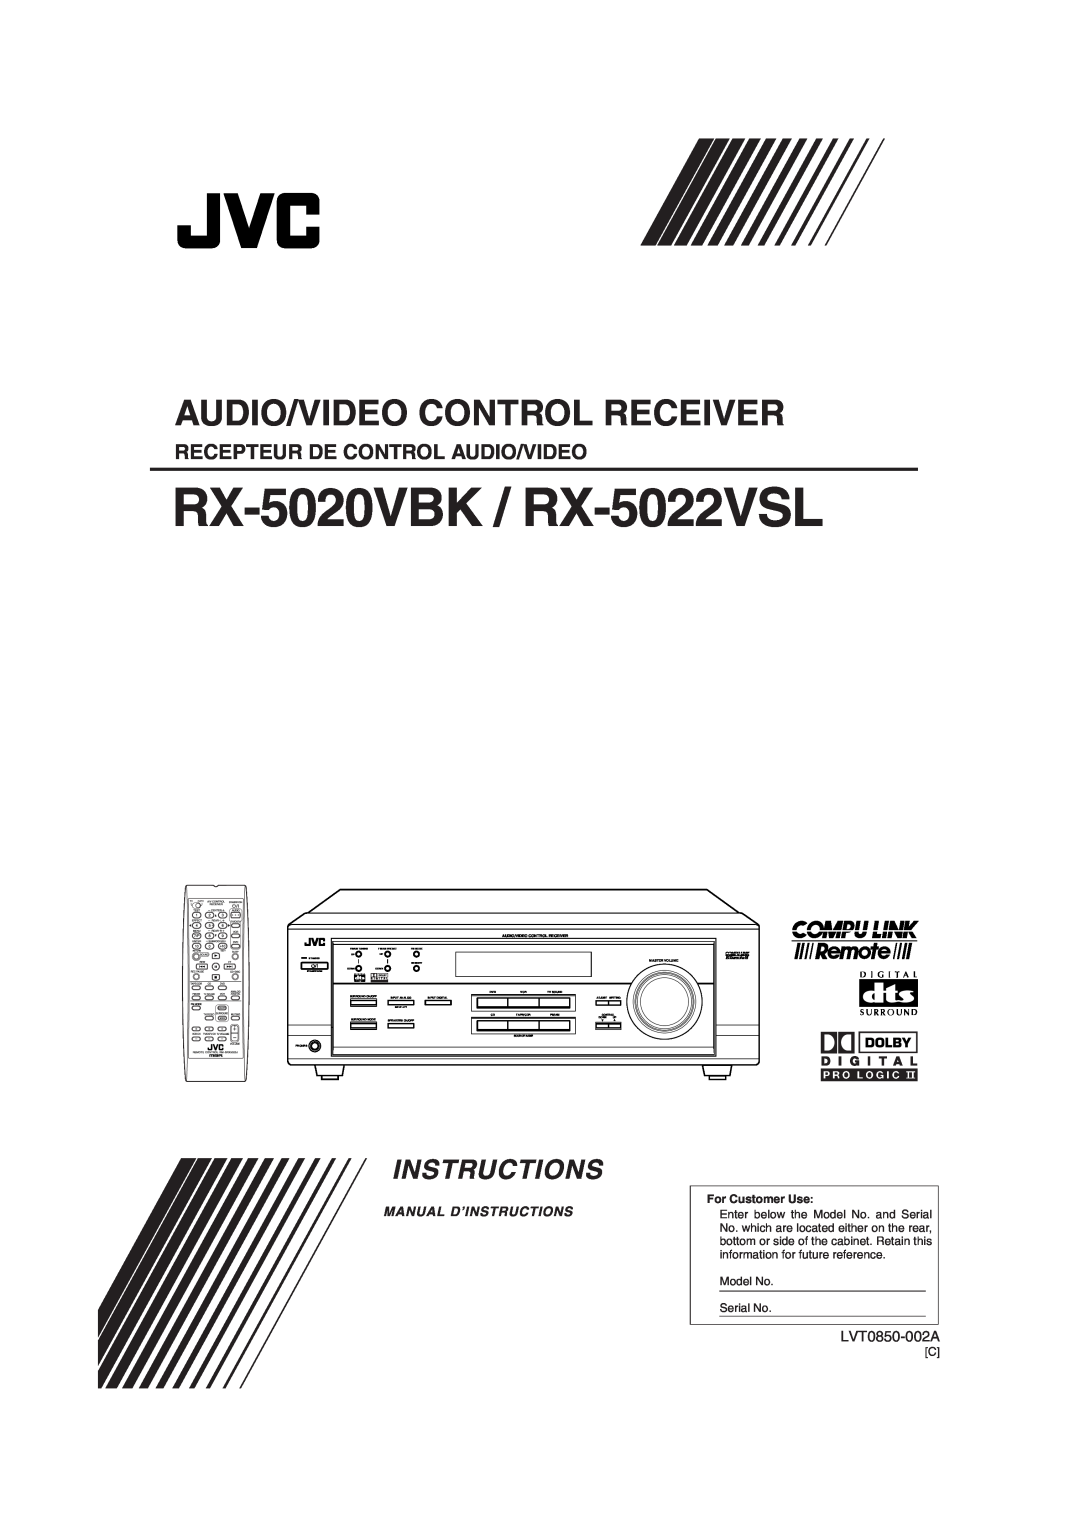 JVC RX-5020VBK / RX-5022VSL, Audio/Video Control Receiver, Instructions, Recepteur De Control Audio/Video, LVT0850-002A 